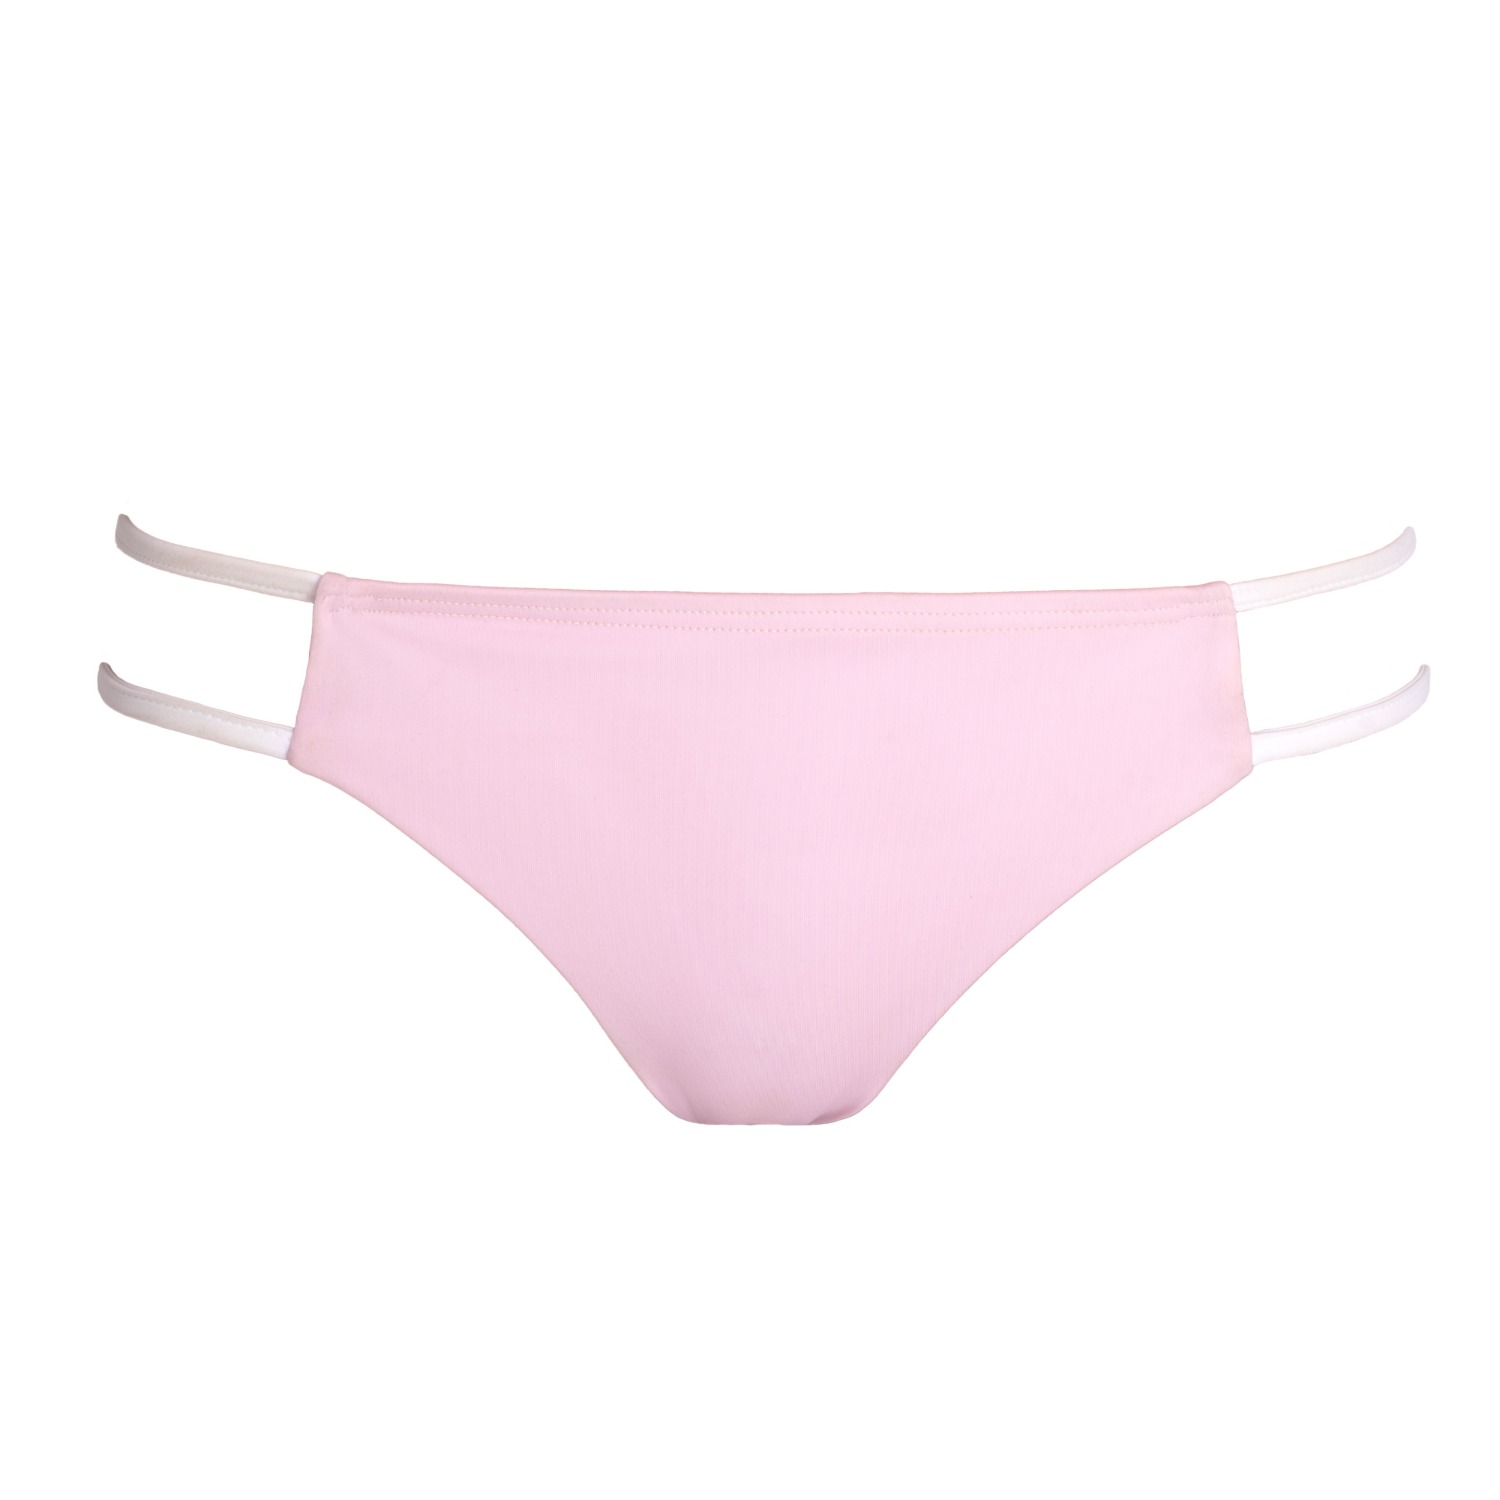 Allyors - Zipper - Bikini Top - Pink by Yorstruly